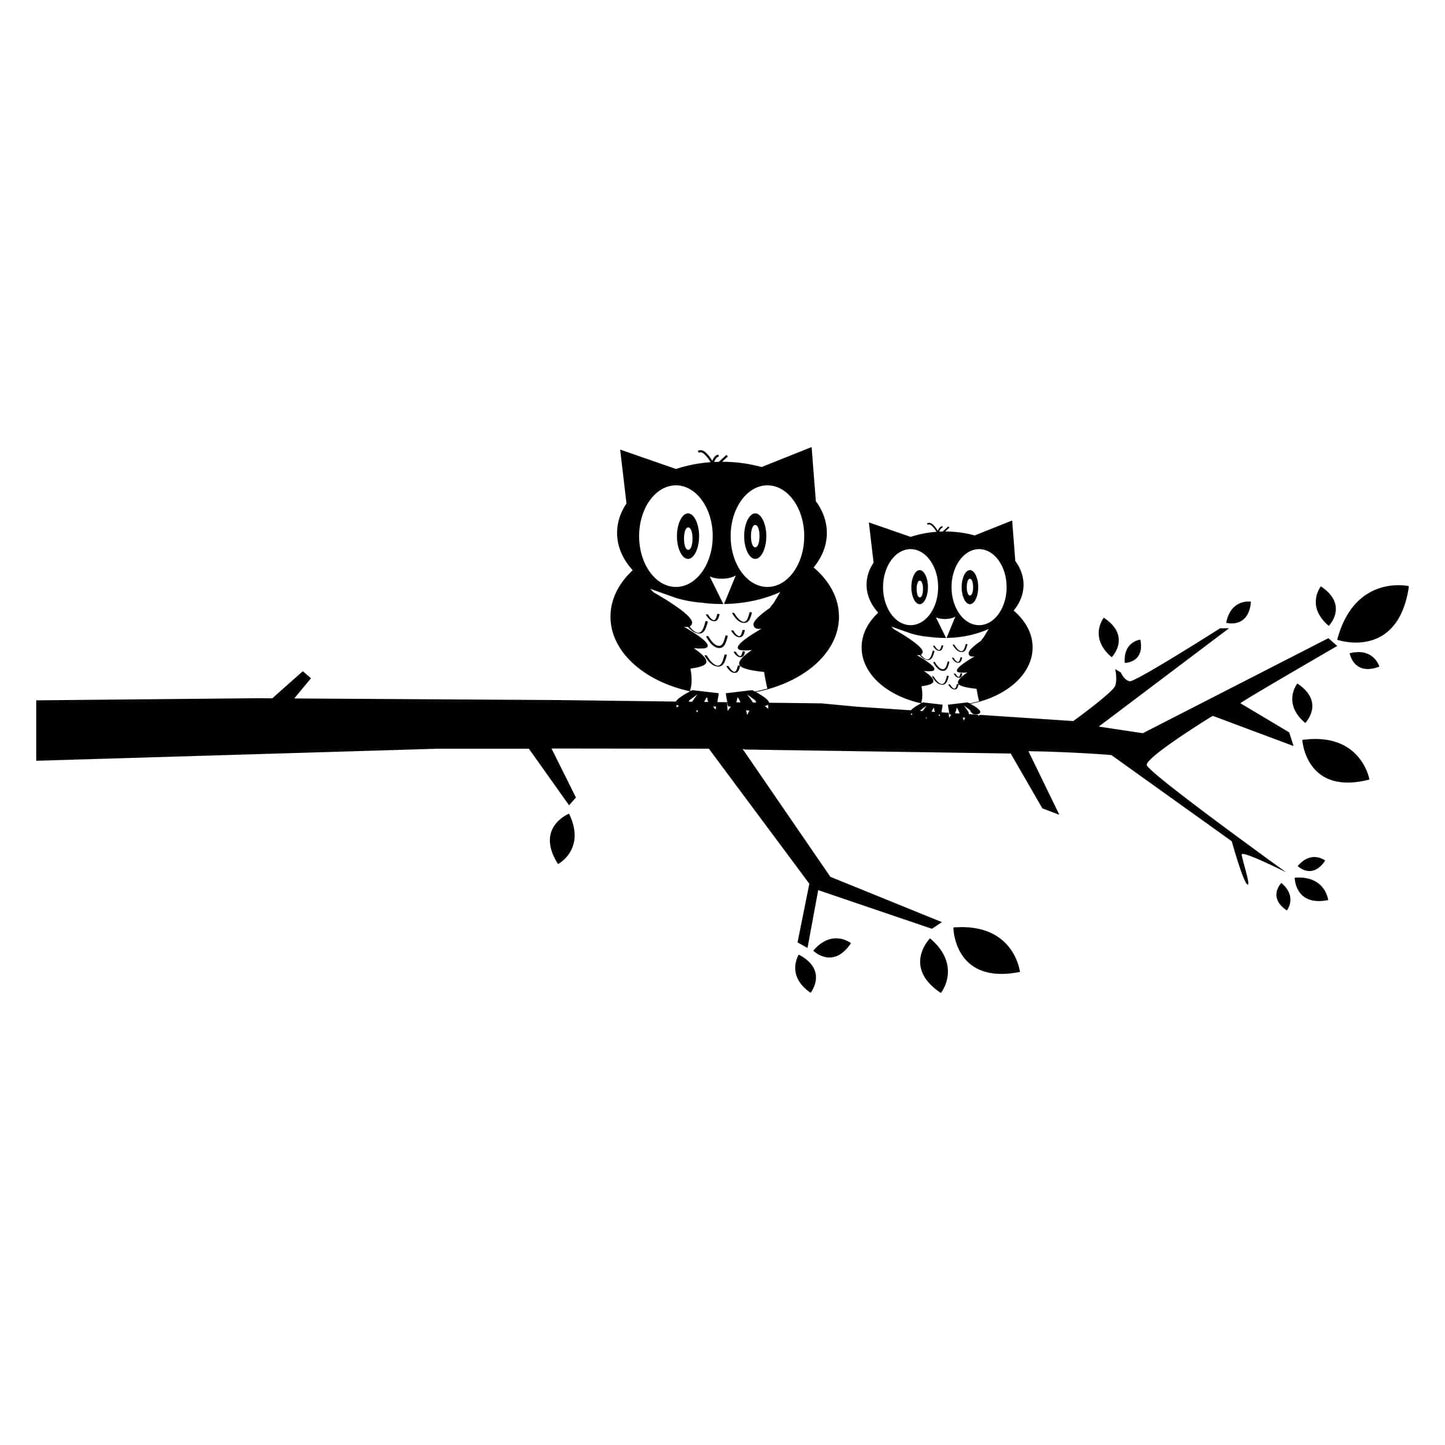 Owl on Tree Branch Vinyl Wall Decal Sticker. #MM129